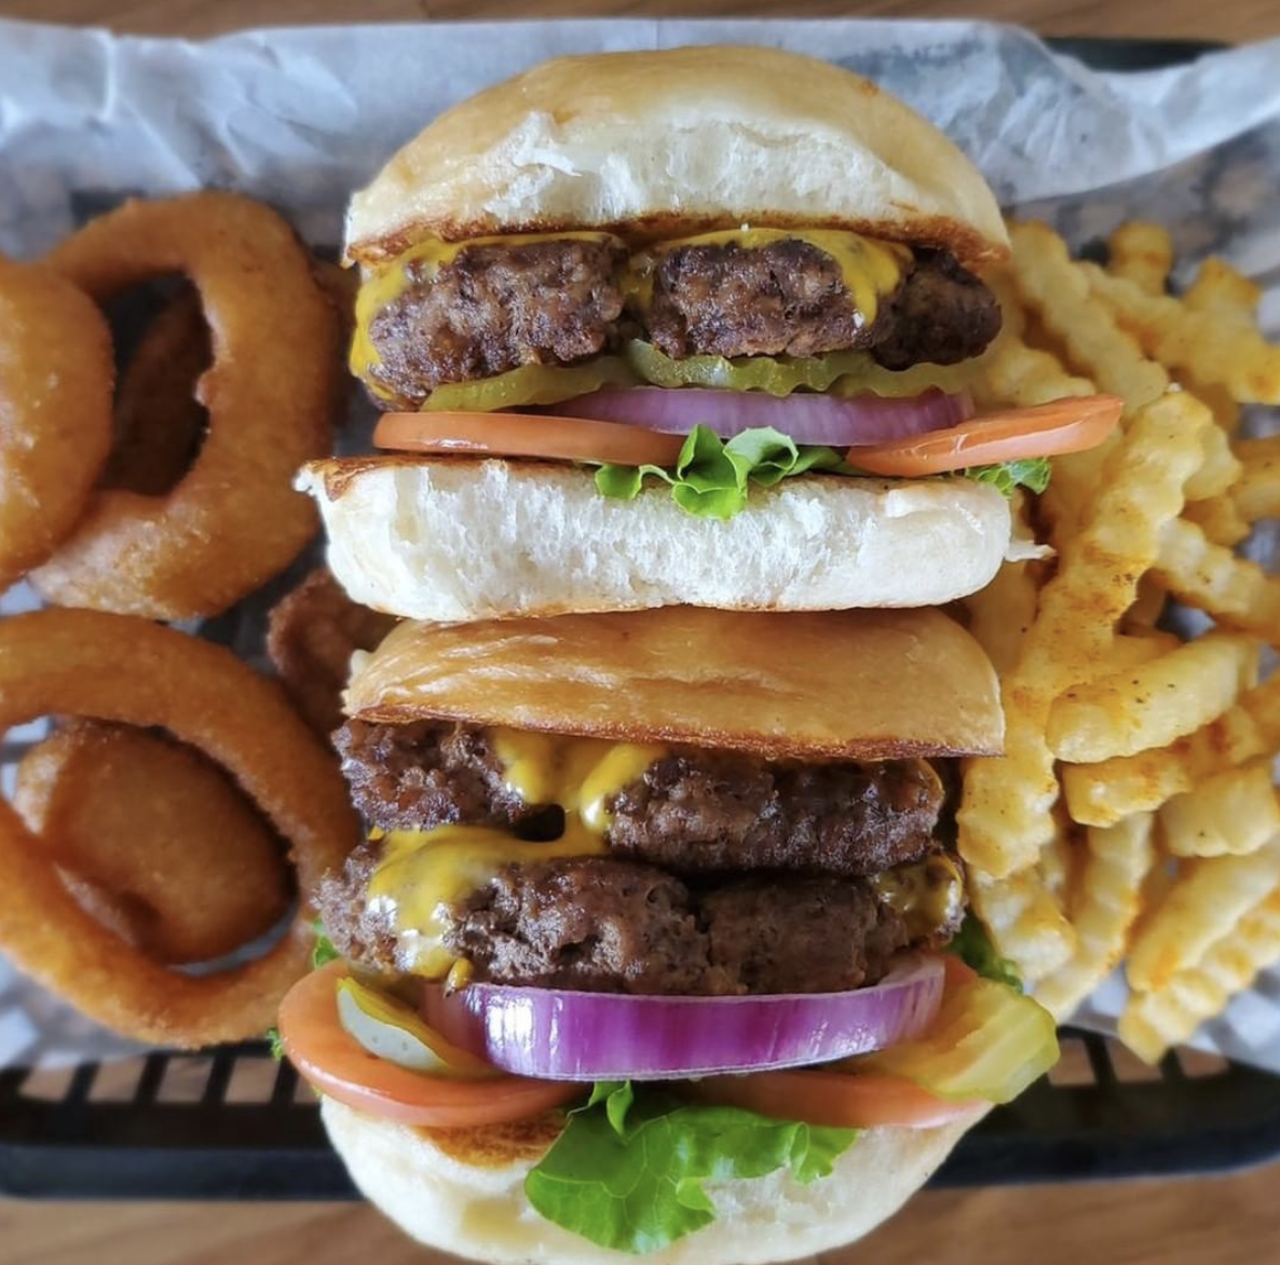 A Texas chain is demanding San Antonio's Papa's Burgers change its